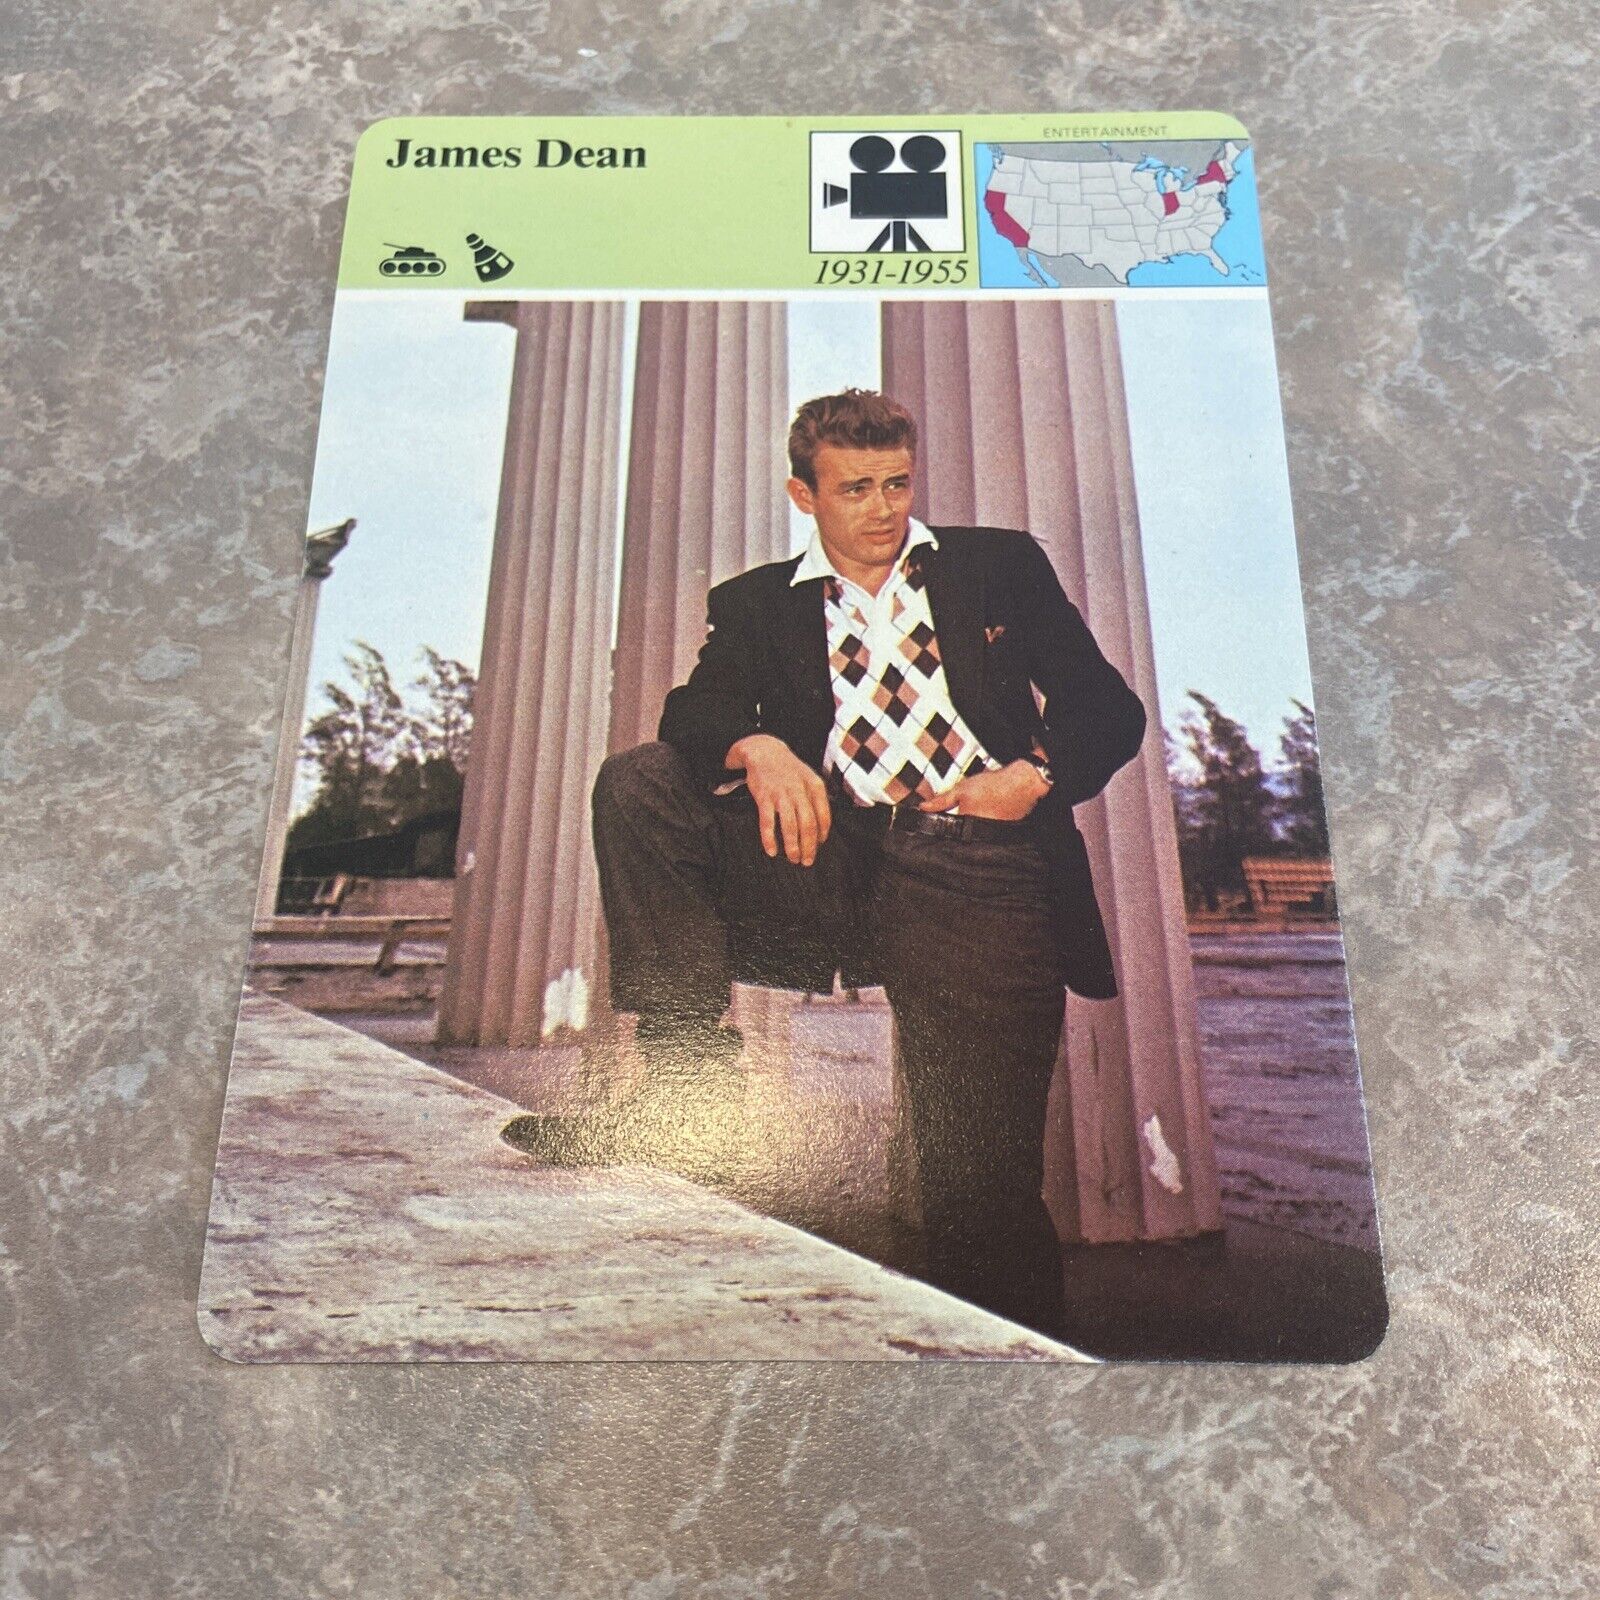 1981 PANARIZON JAMES DEAN #03.012.88.16 CARD REBEL WITHOUT A CAUSE BETTMANN